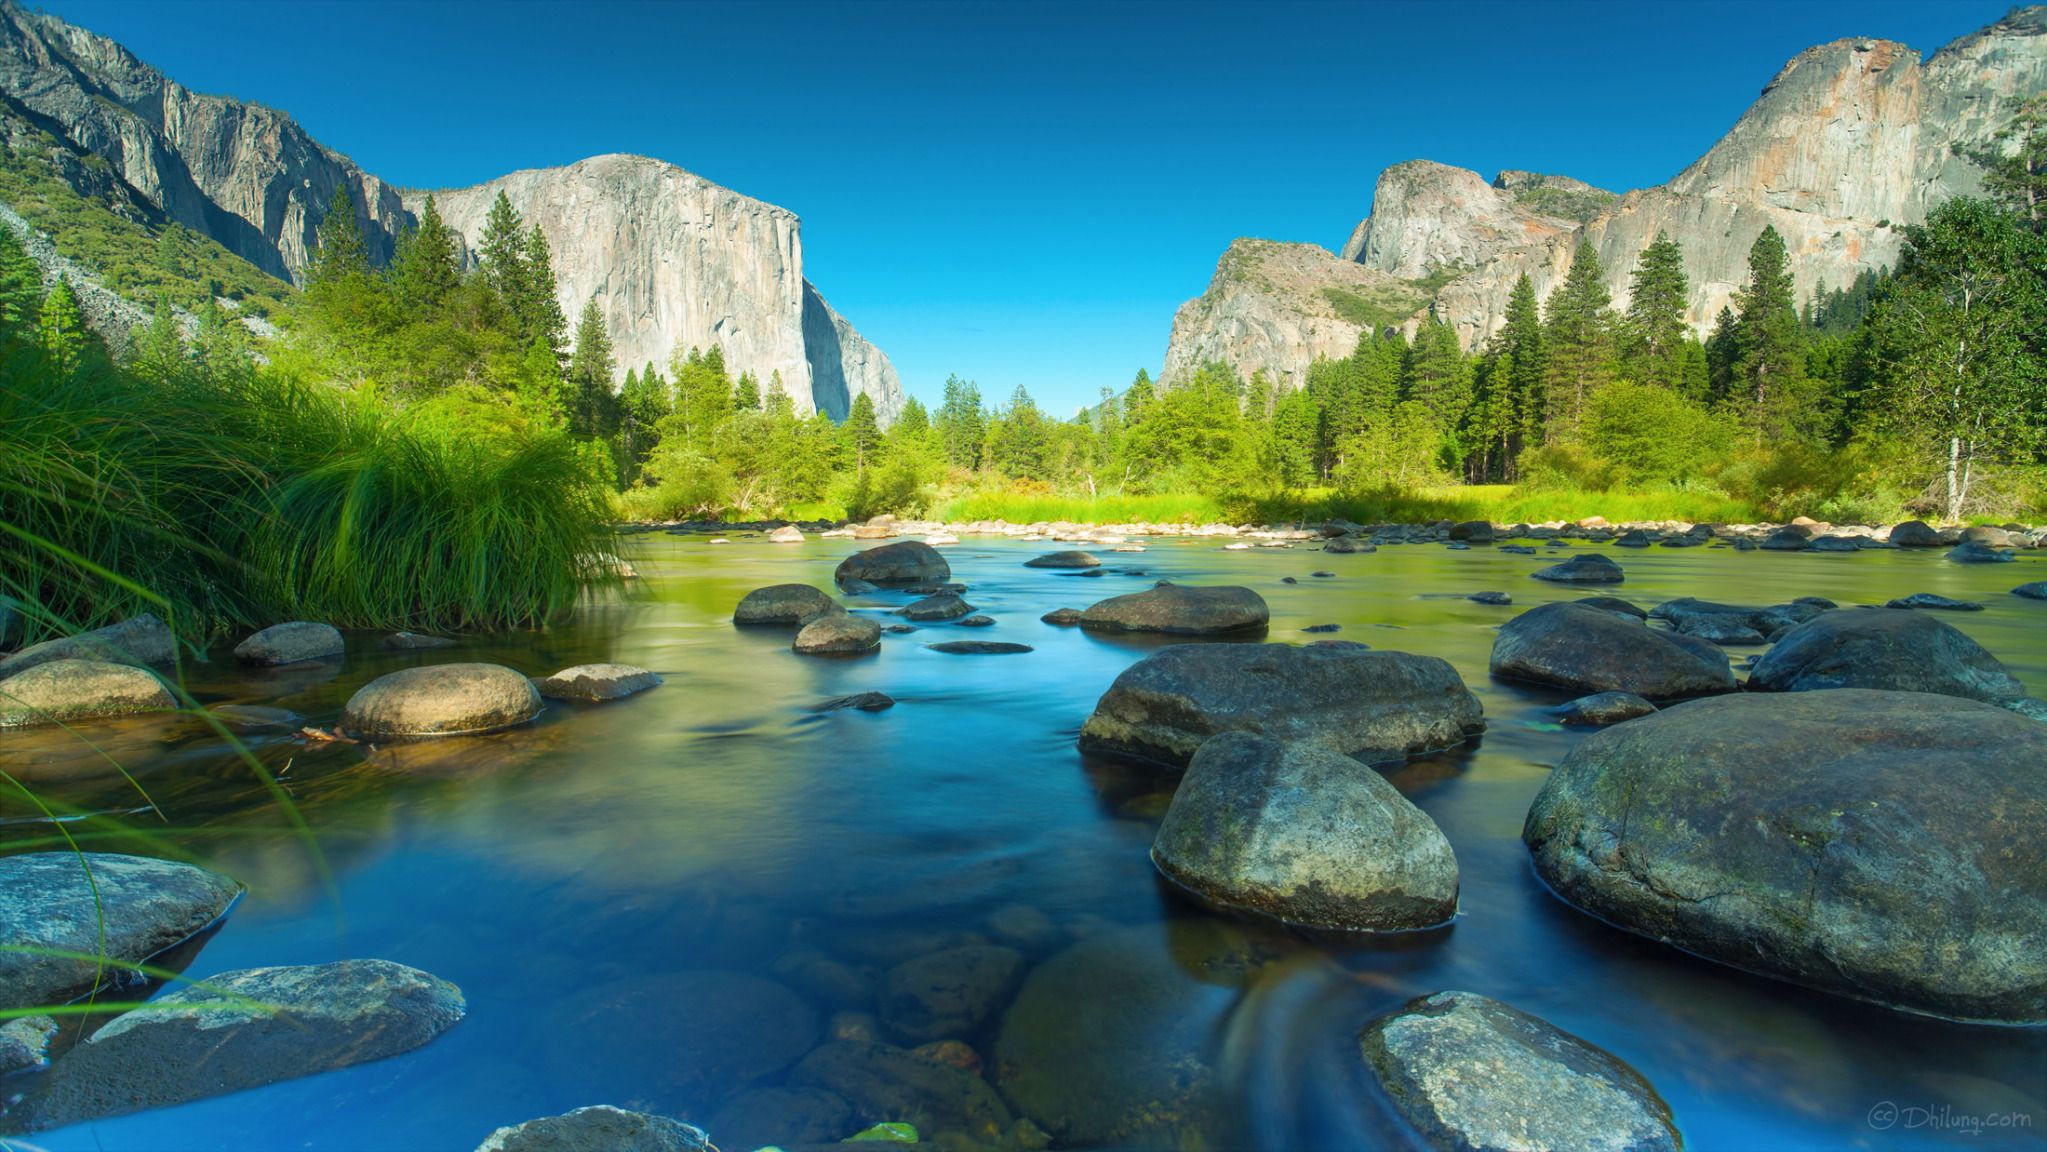 Yosemite Desktop Wallpaper, Yosemite Images Free, New Backgrounds